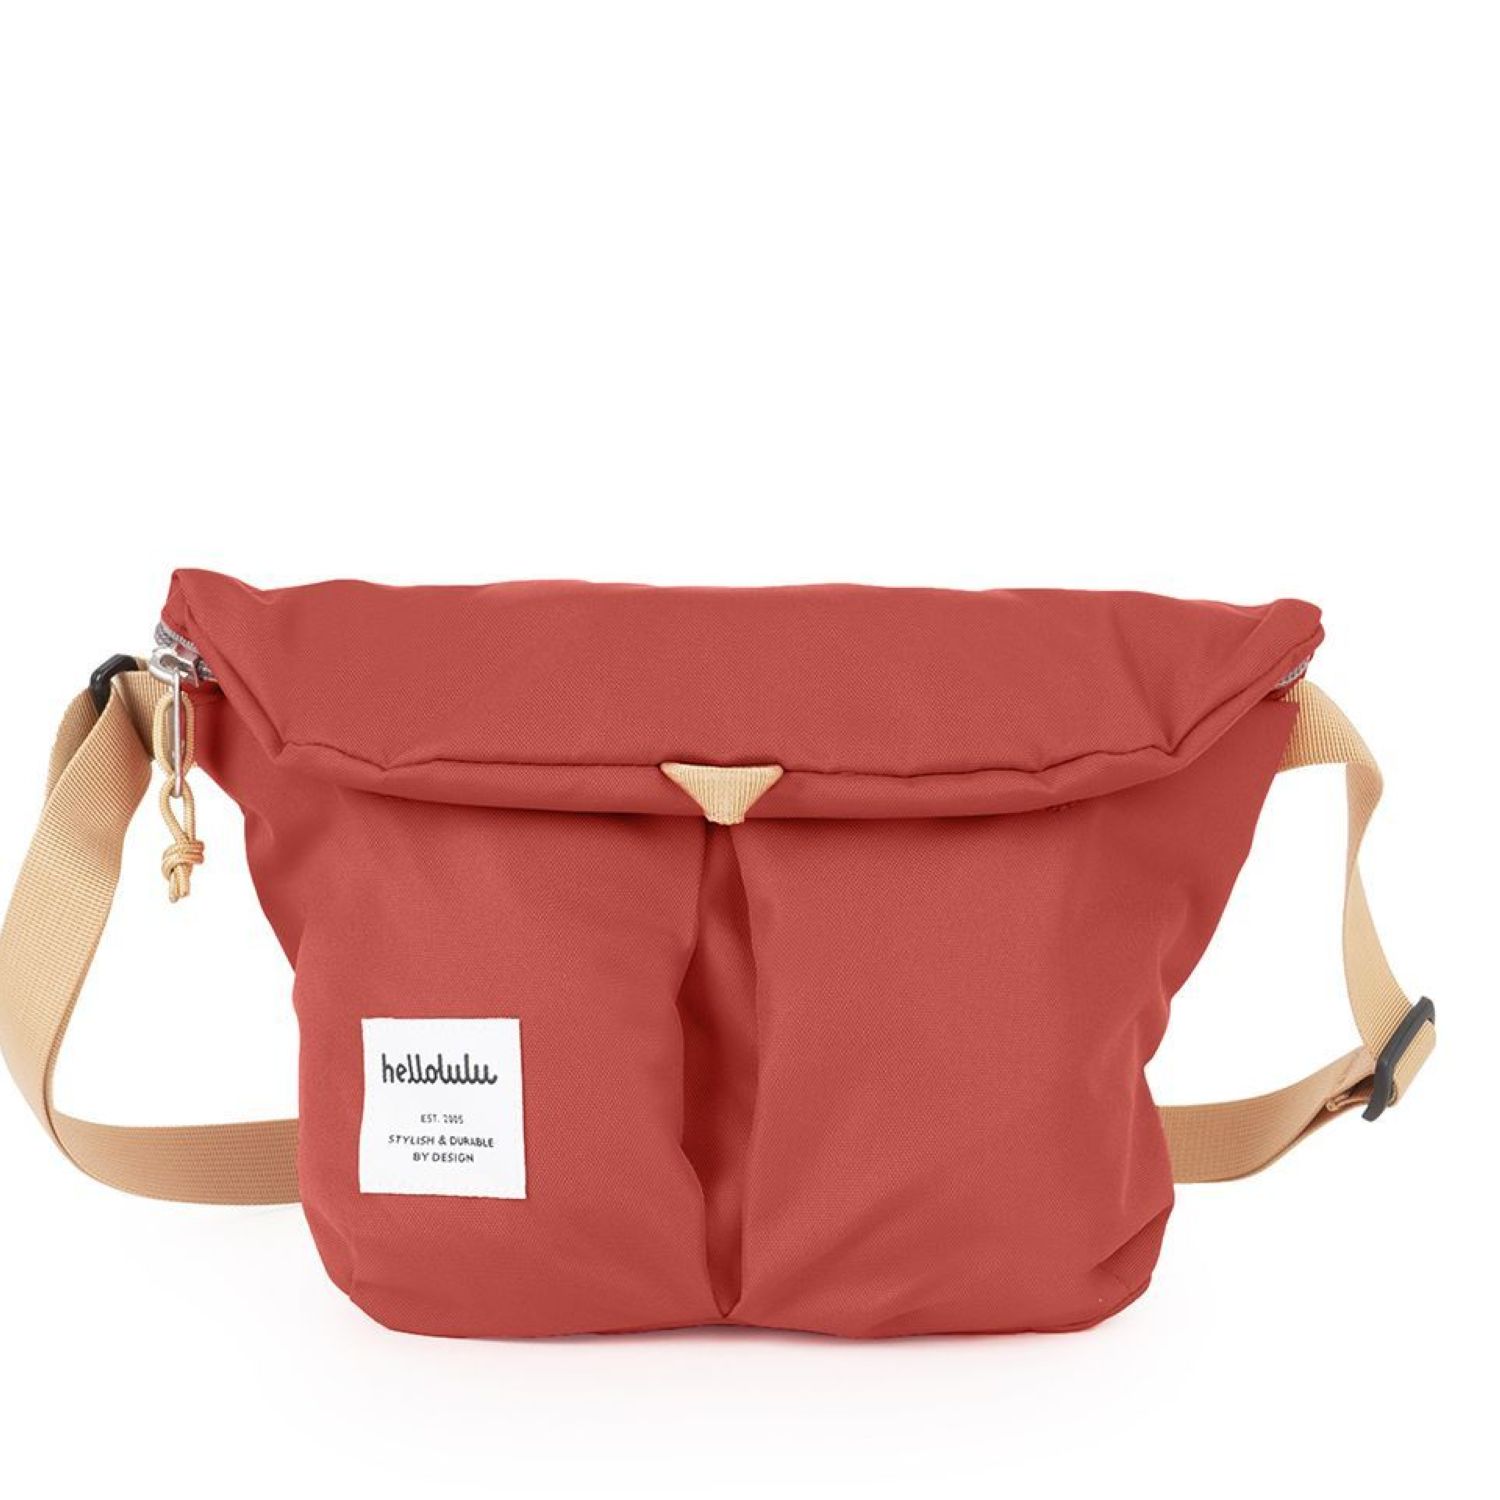 Hellolulu Mini Kasen Shoulder Bag (Pomegranate) - Hellolulu Singapore